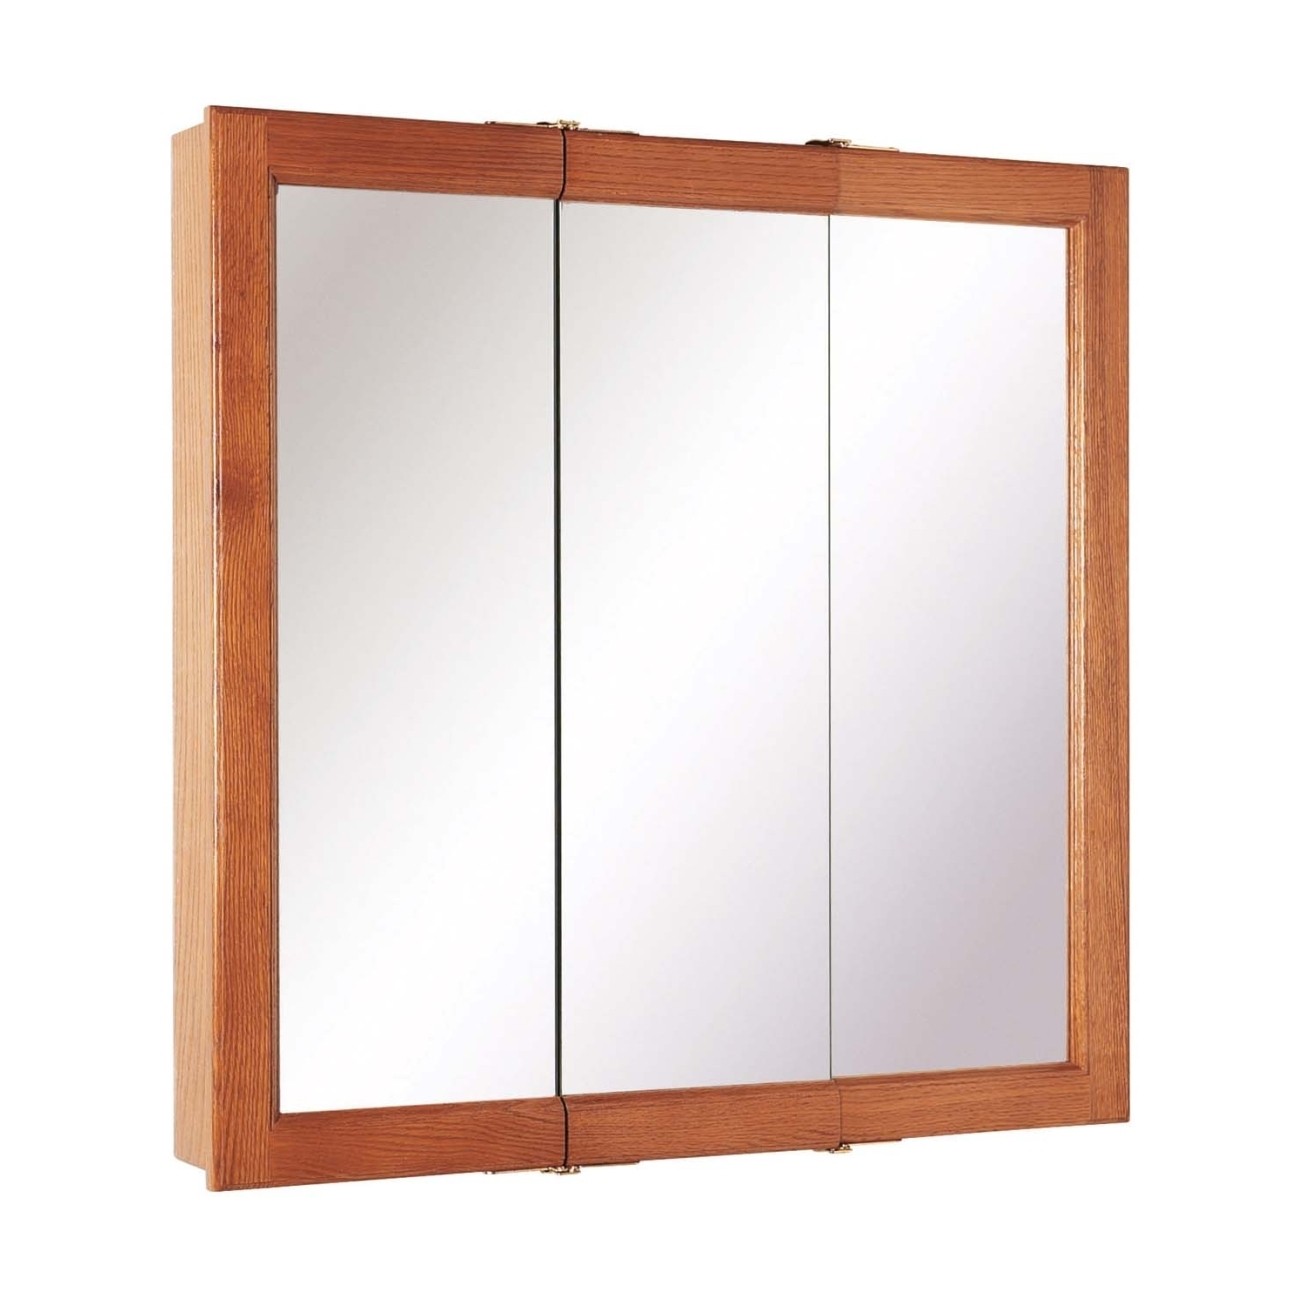 Using cherry wood framed hanging bathroom mirror medicine cabinets